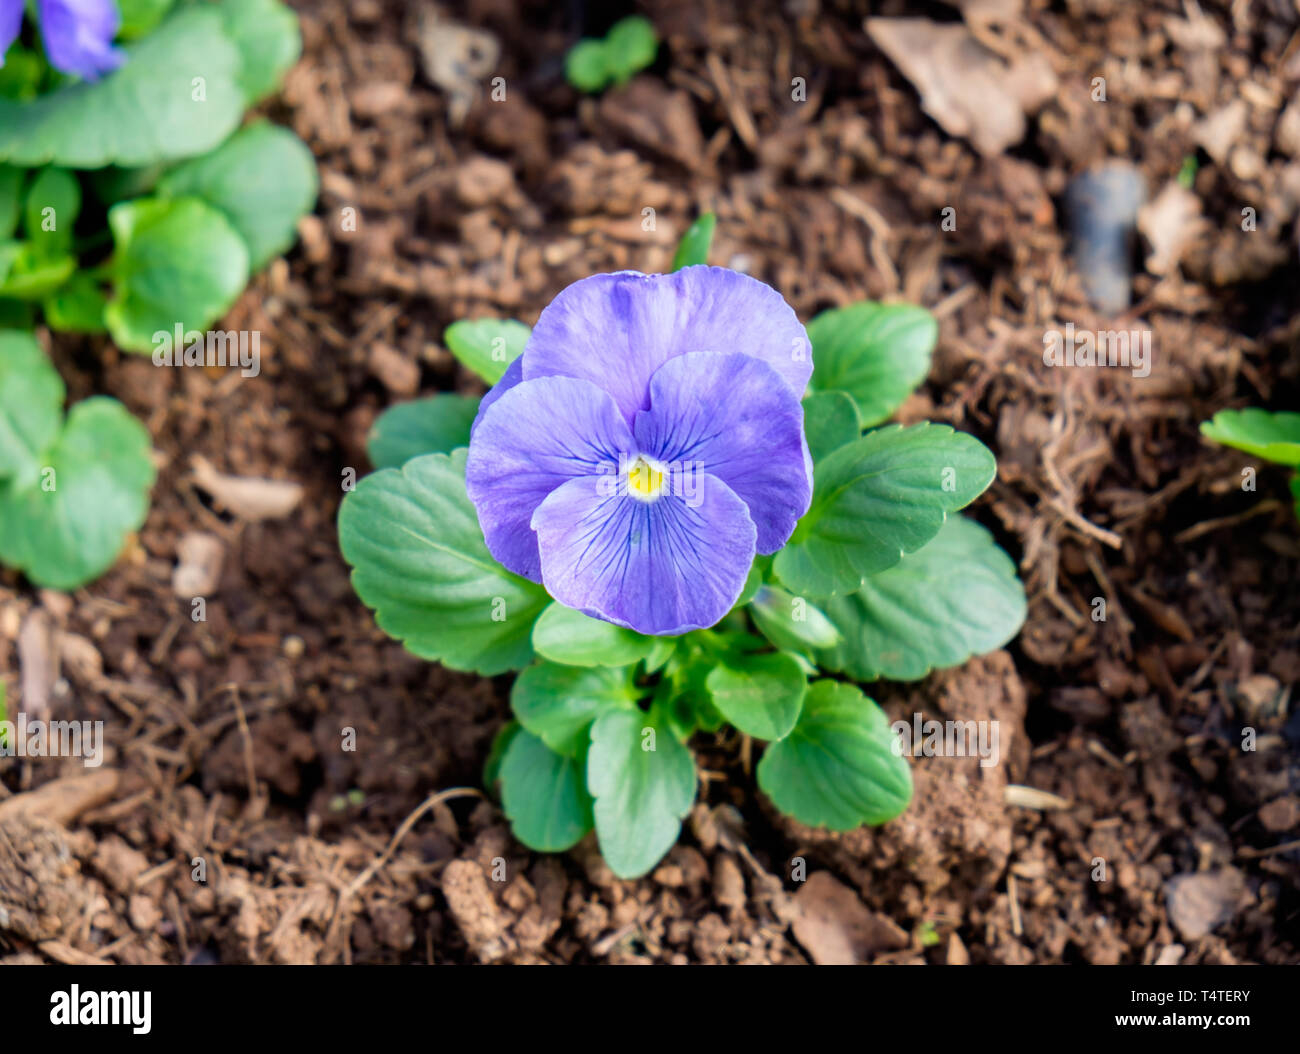 Pansy,viola cornuta,purple flower in garden Stock Photo